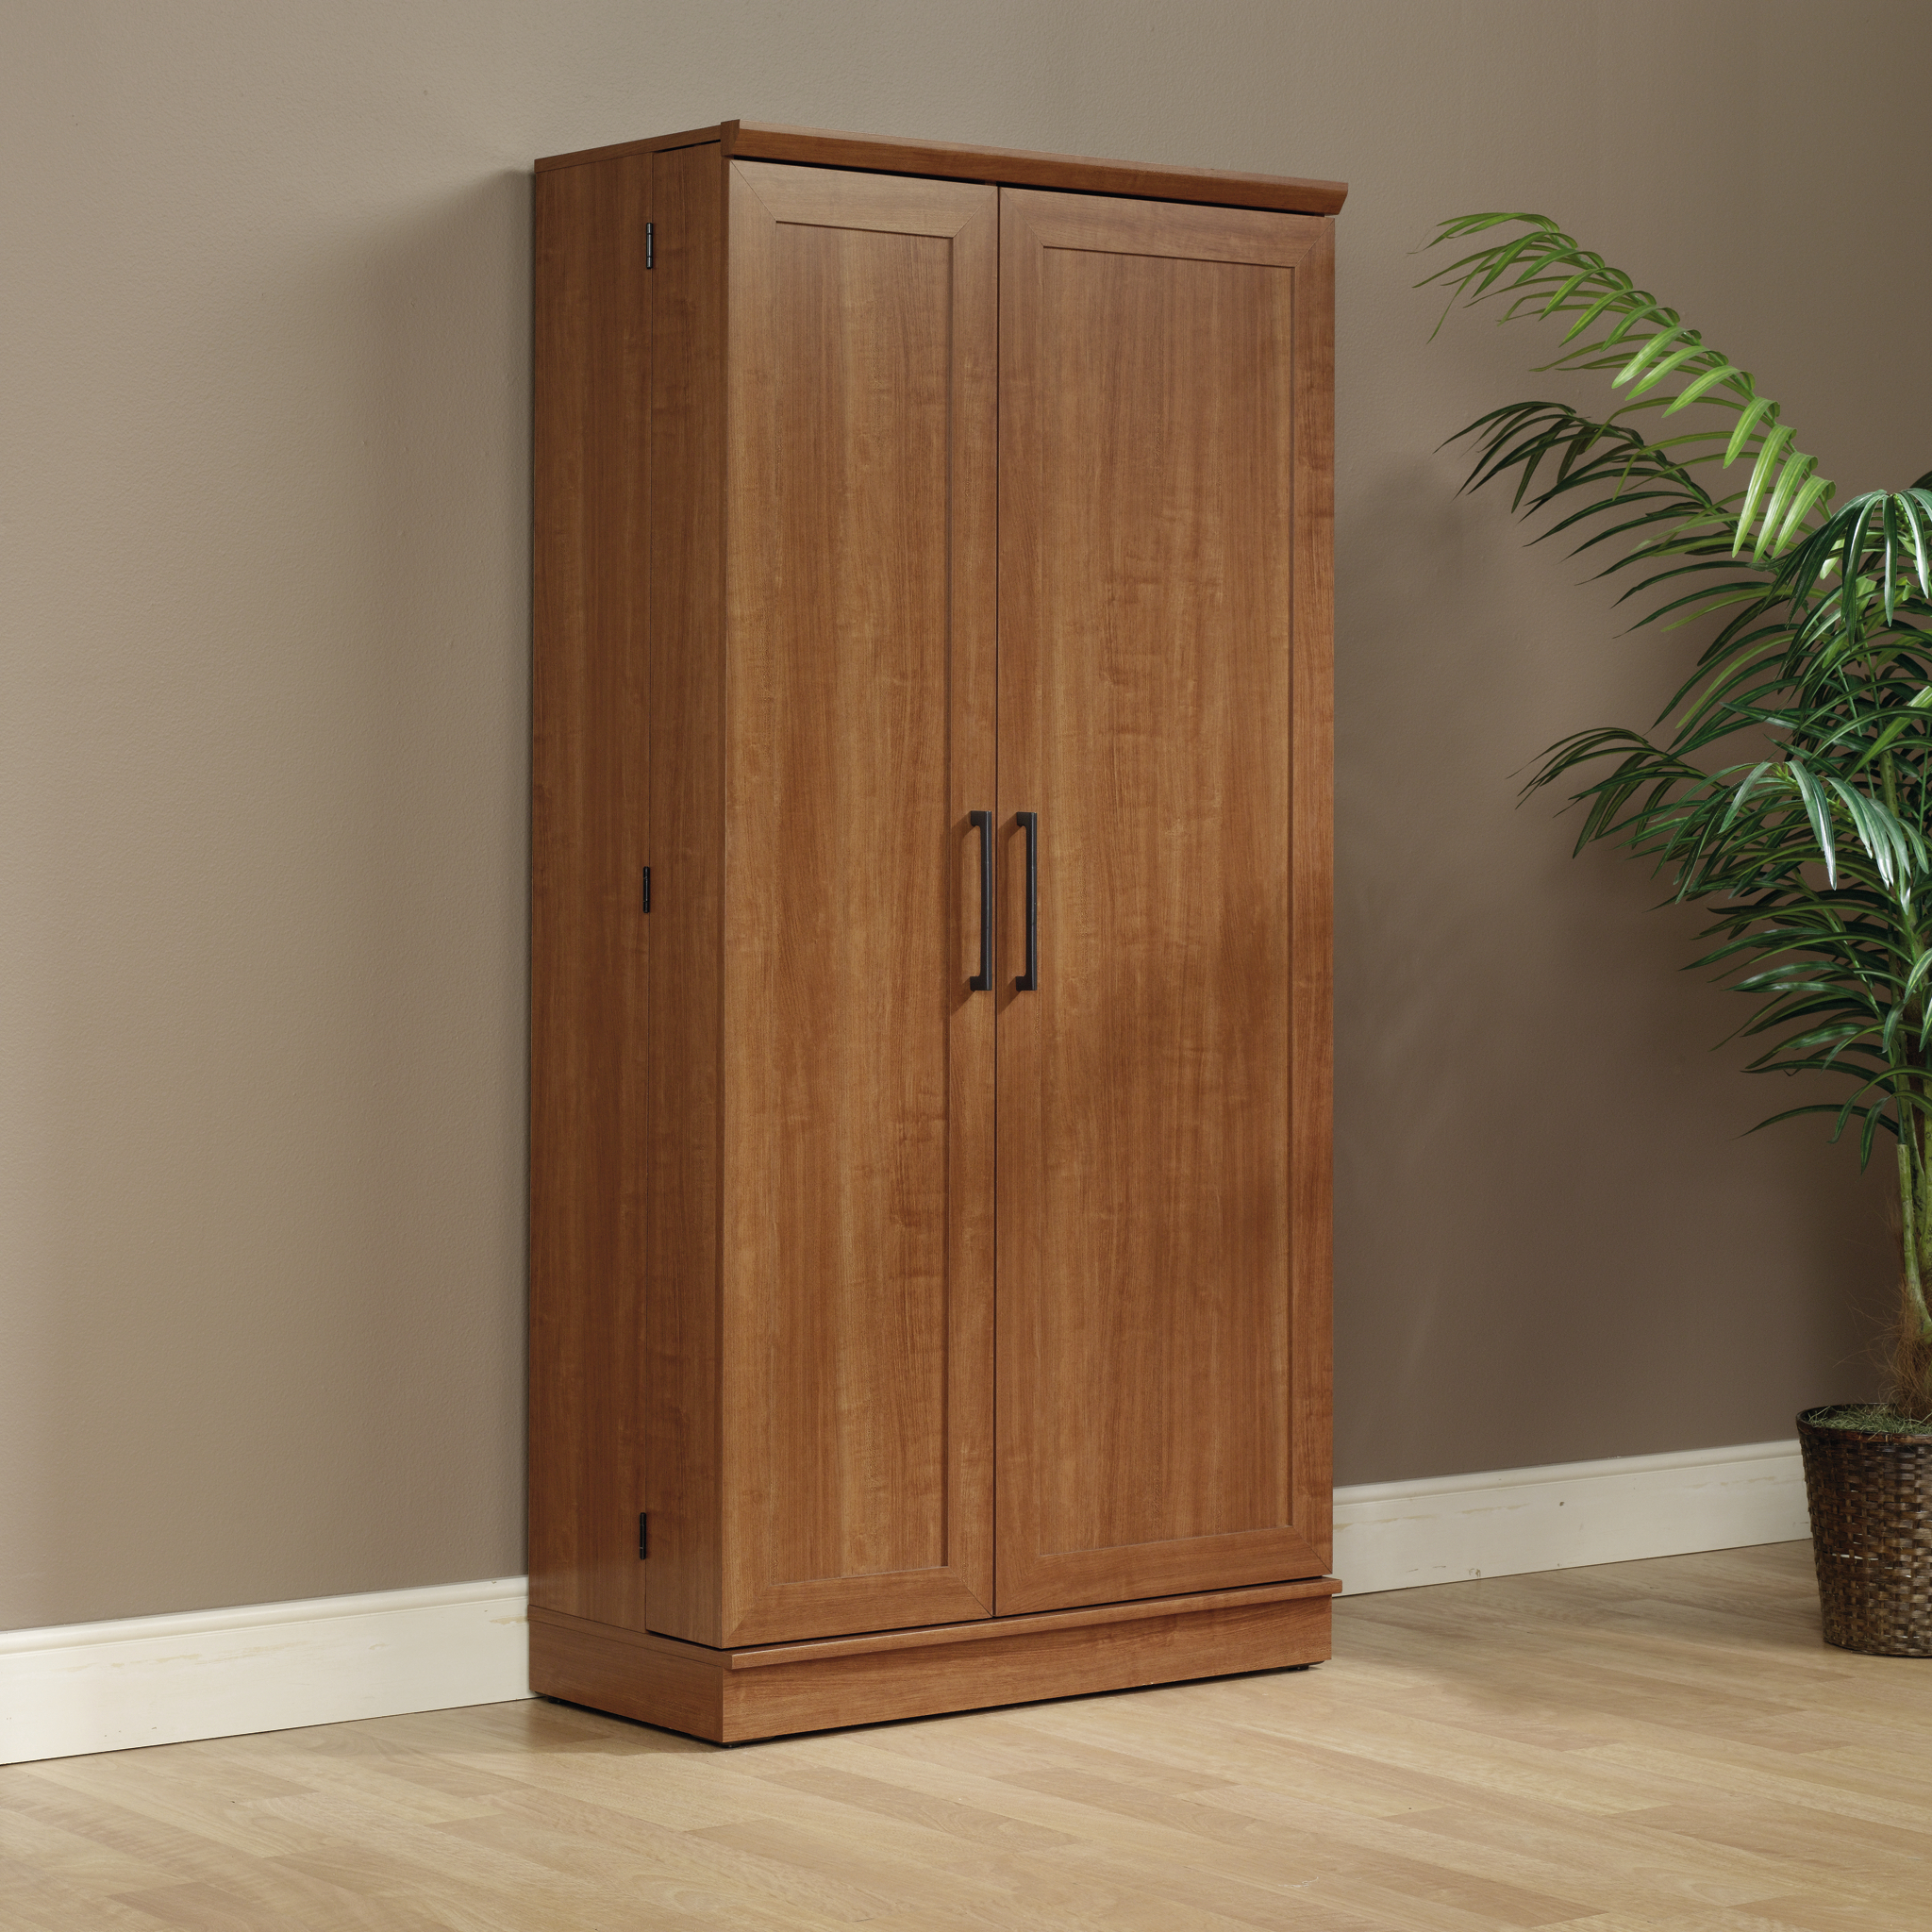 Sauder HomePlus 71" Tall 2-Door Multiple Shelf Wood Storage Cabinet, Sienna Oak Finish - image 5 of 9